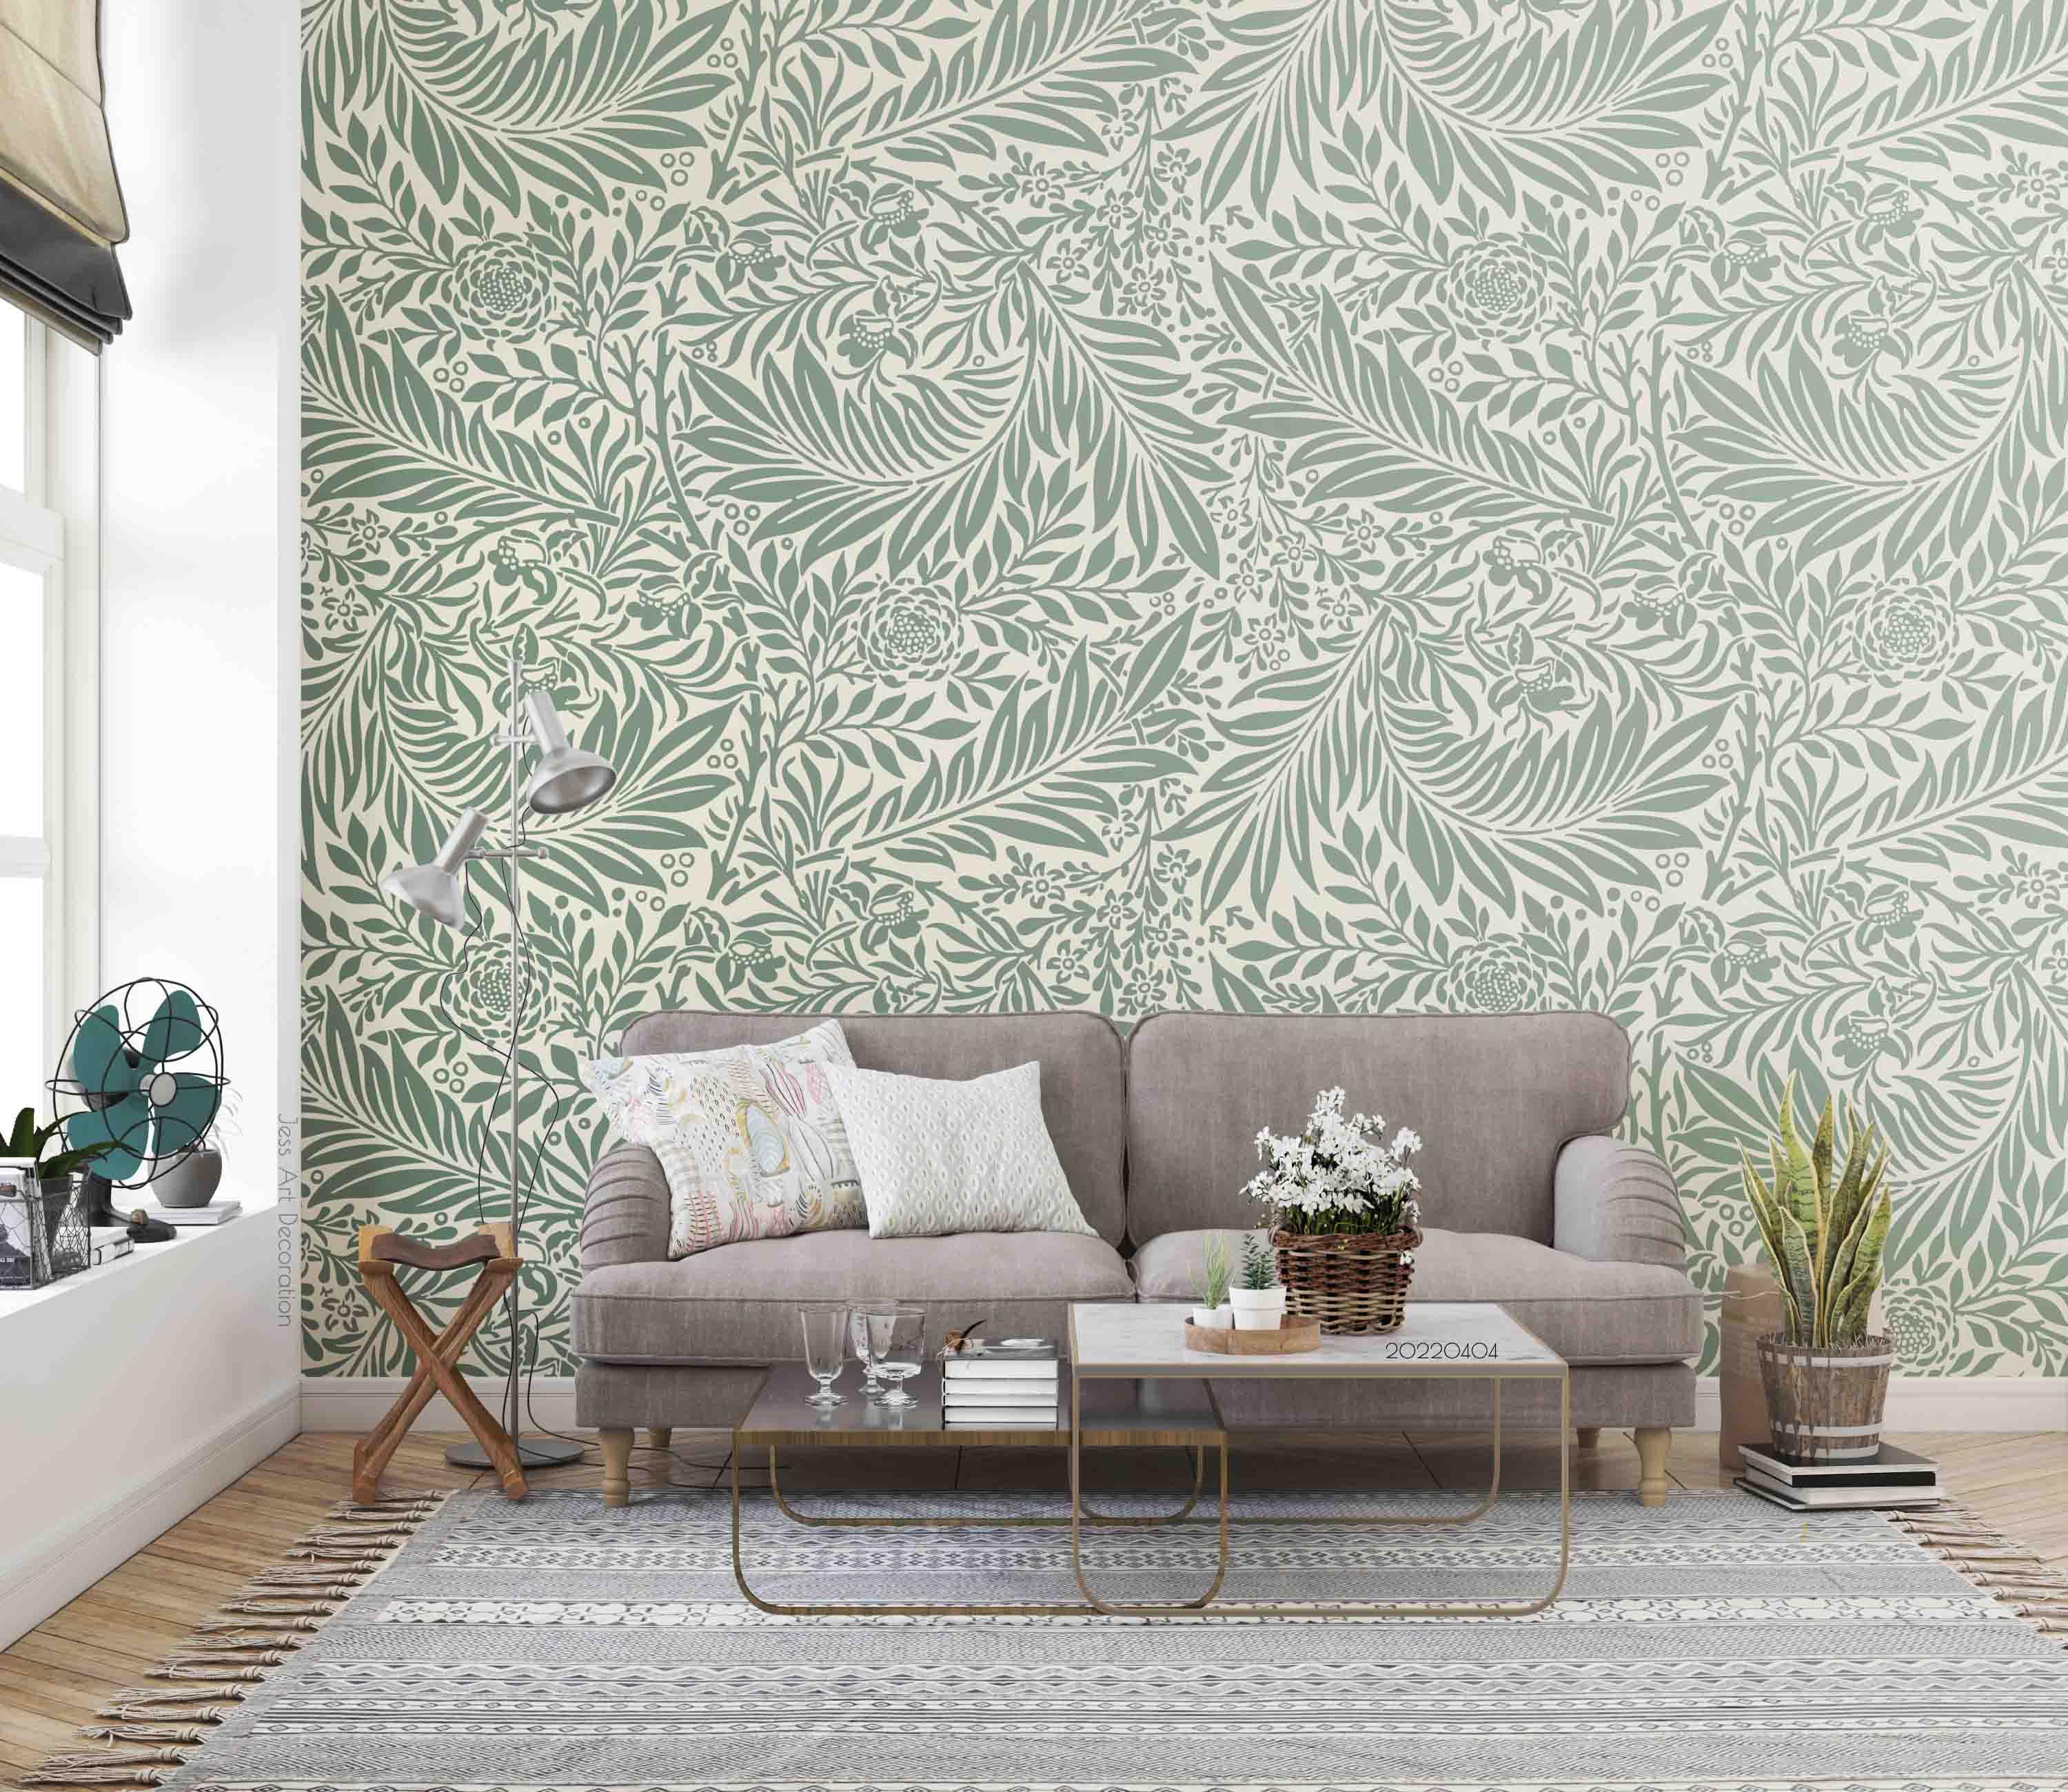 3D Vintage Plants Leaf Pattern Wall Mural Wallpaper GD 4002- Jess Art Decoration